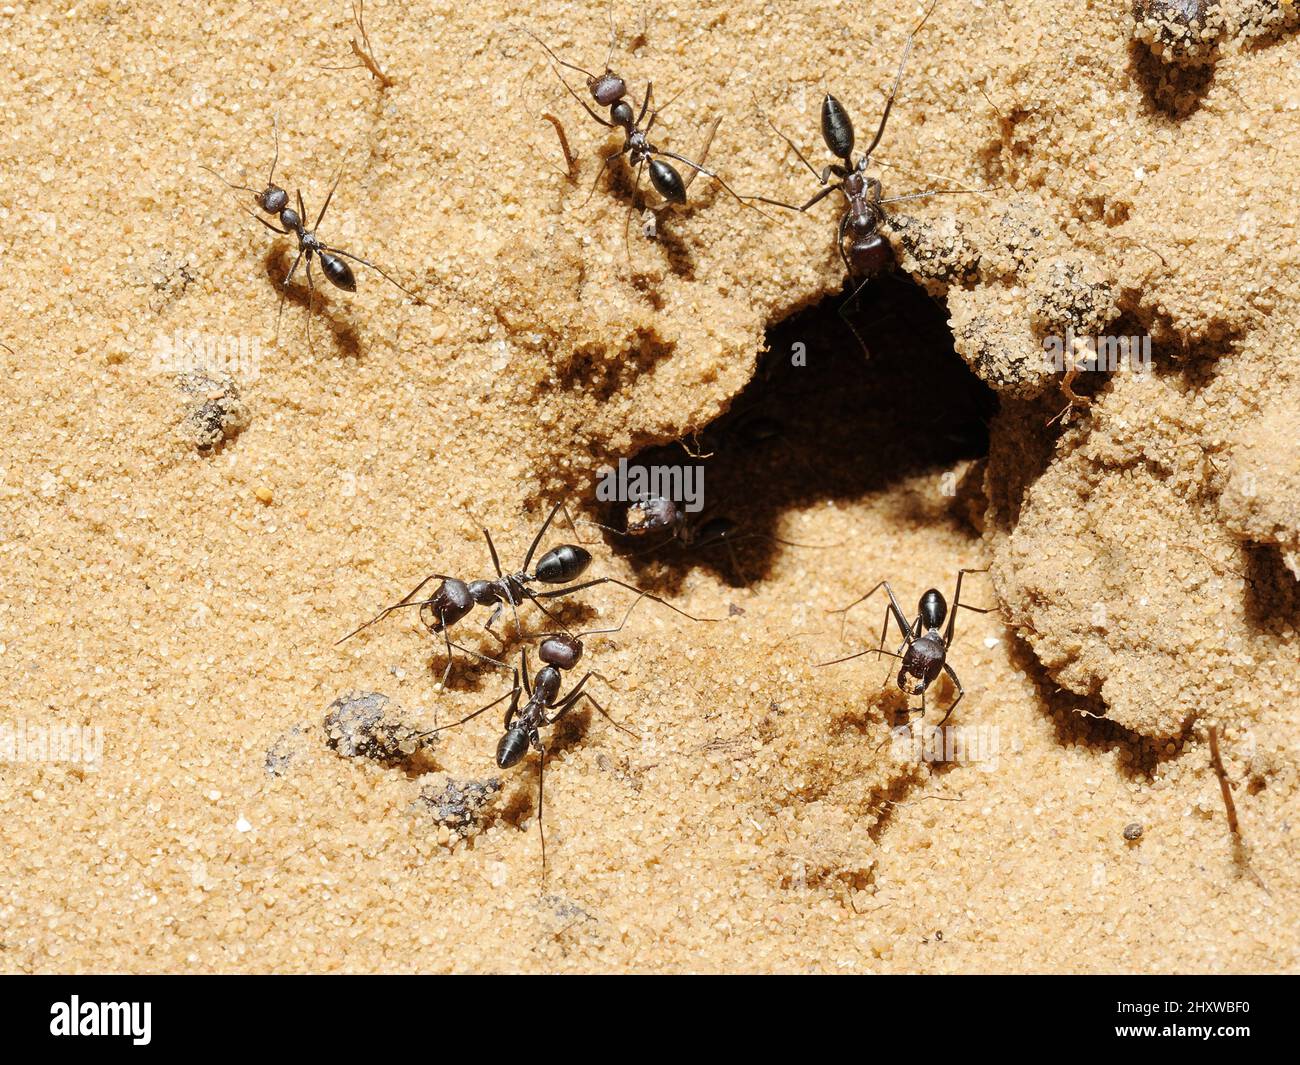 Nahaufnahme der Natur Israels - cataglyfis Ameisen Stockfoto